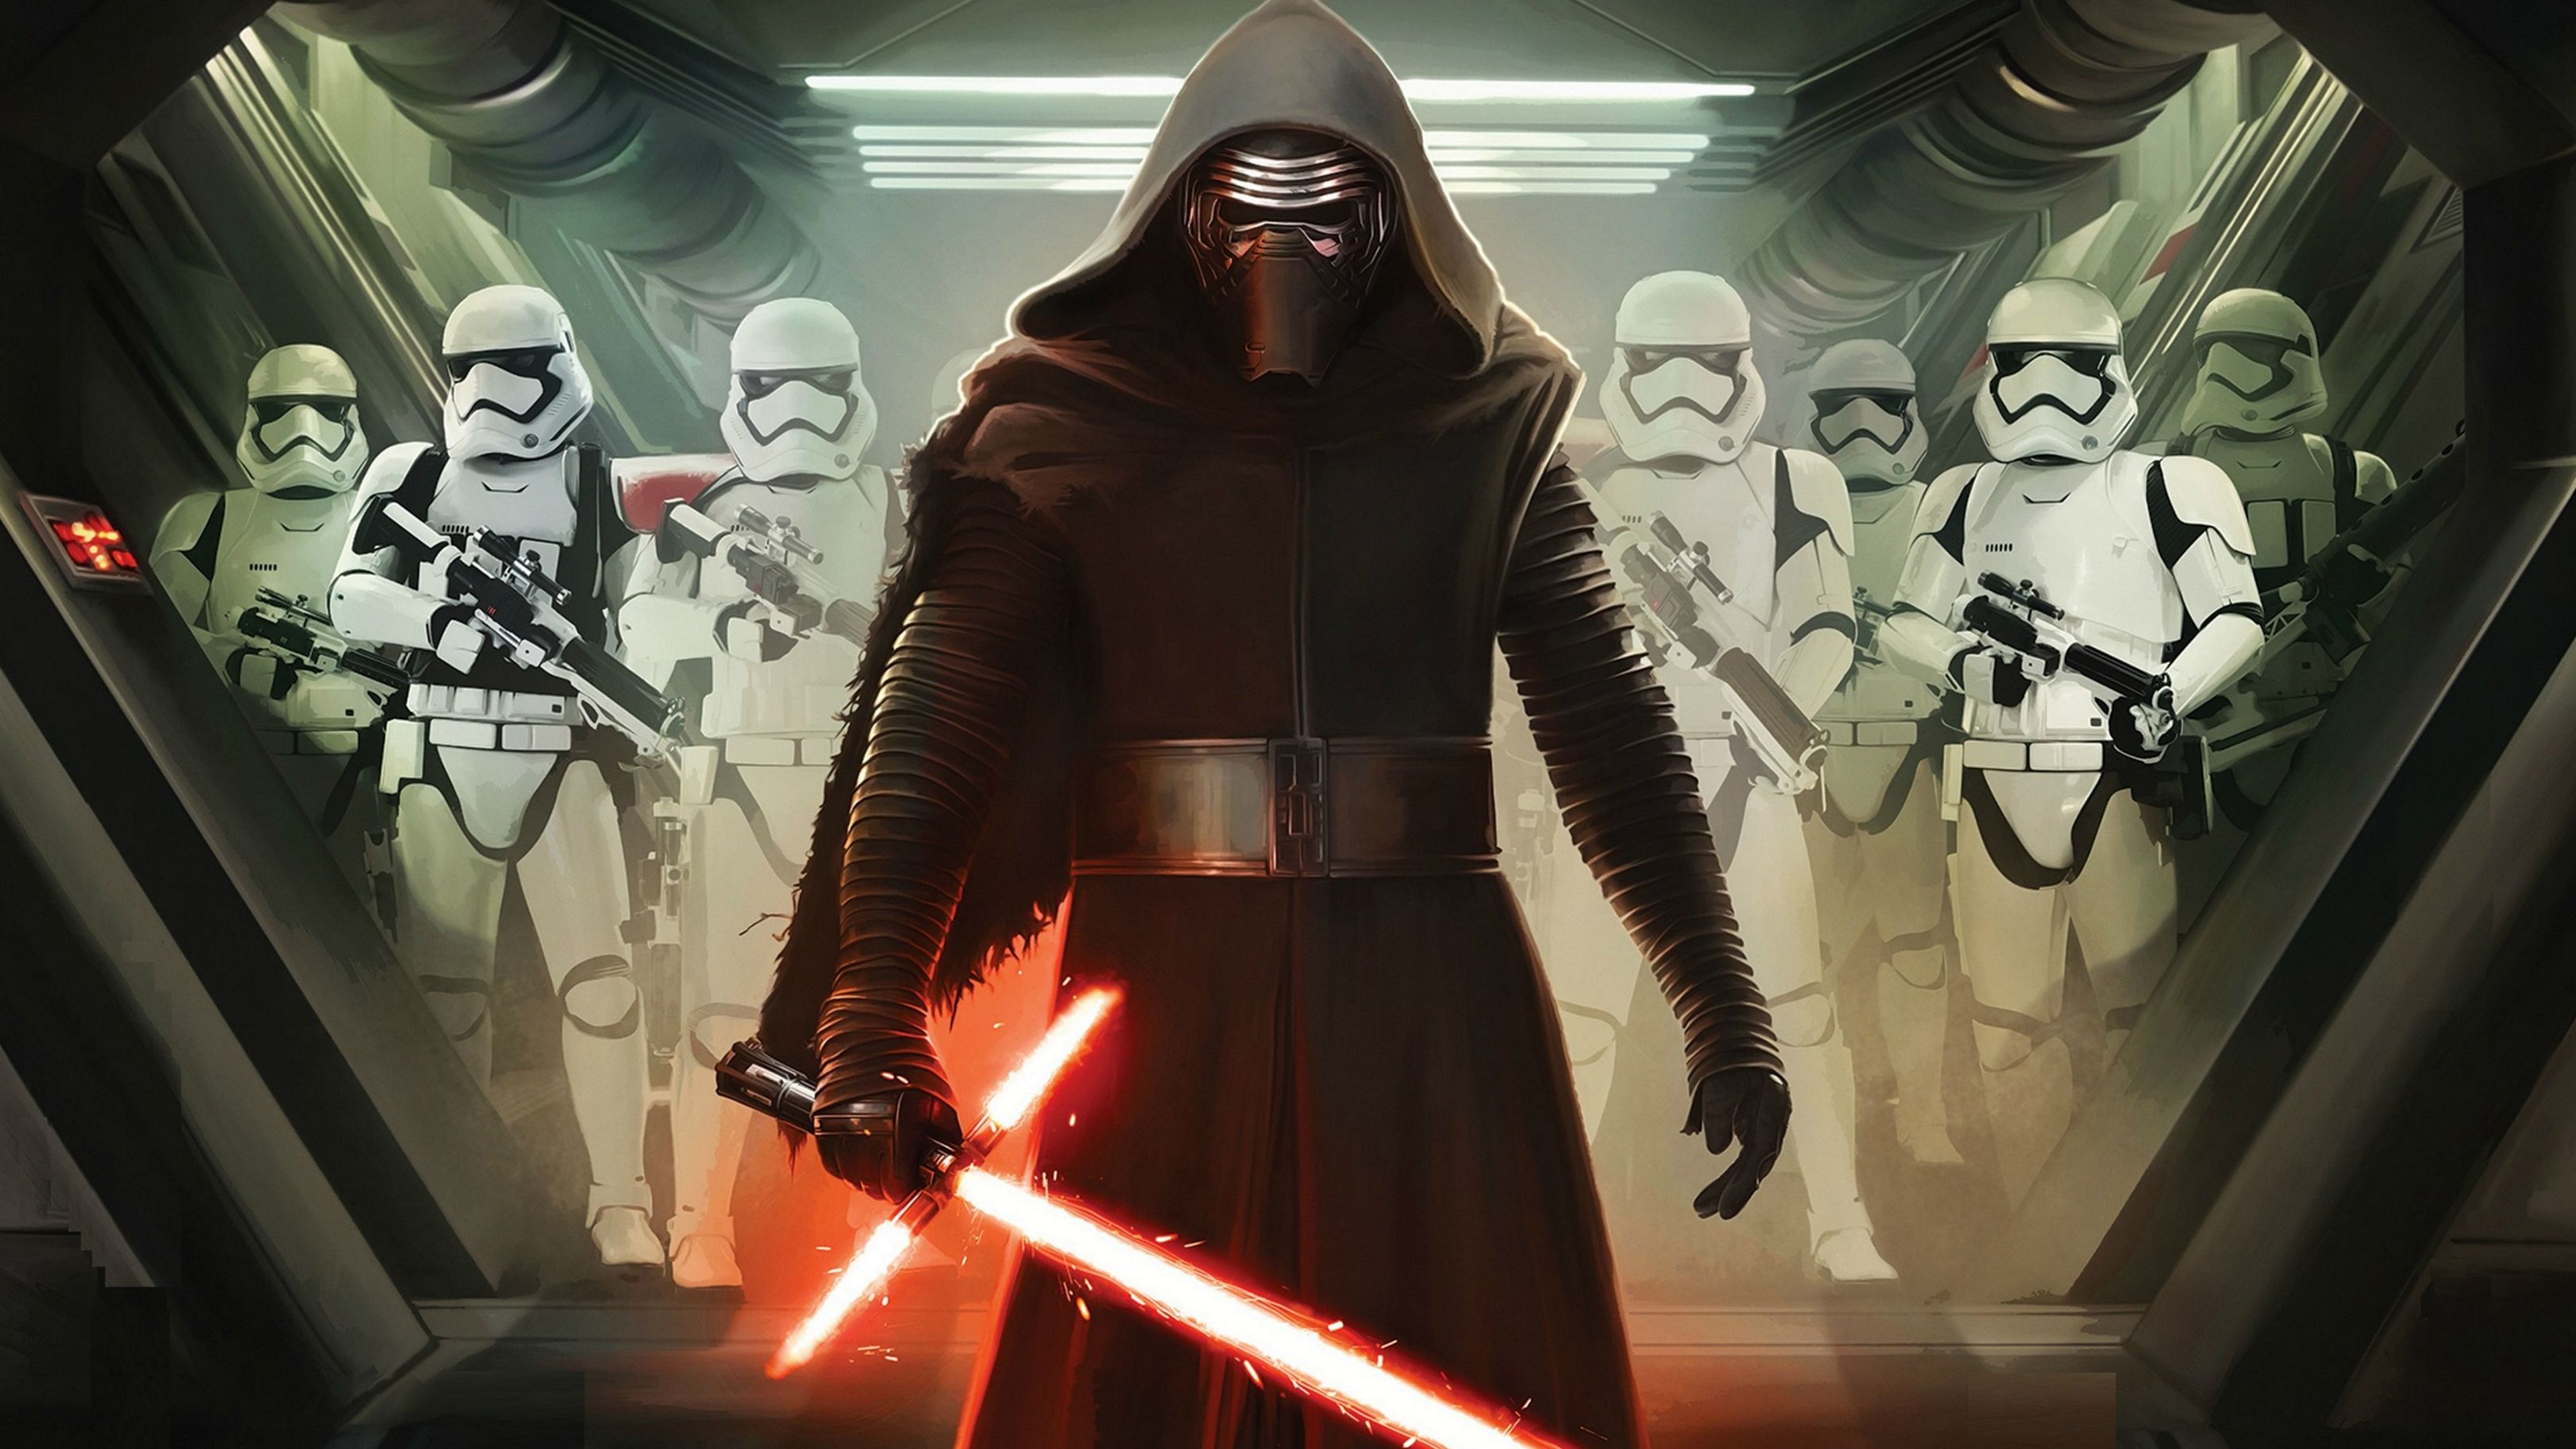 Download 3840x2160 Star Wars Episode VII: The Force Awakens, Kylo Ren, Stormtrooper, Lightsaber wallpaper